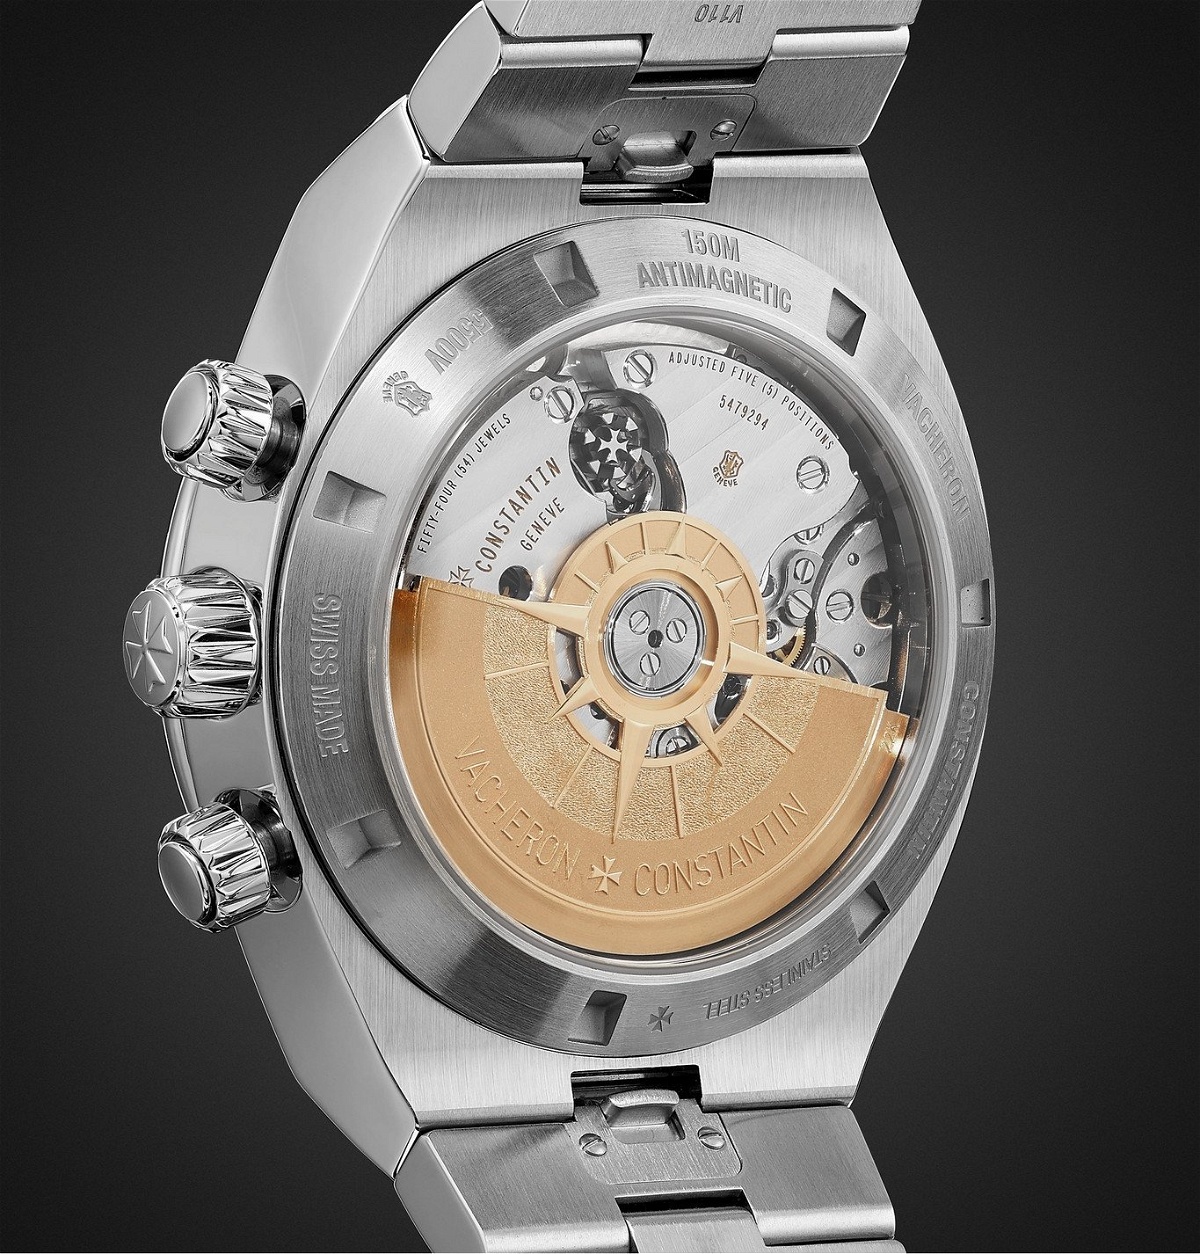 Vacheron Constantin - Overseas Automatic Chronograph 42.5mm Stainless Steel  Watch, Ref. No. 5500V/110A-B481 - Black Vacheron Constantin